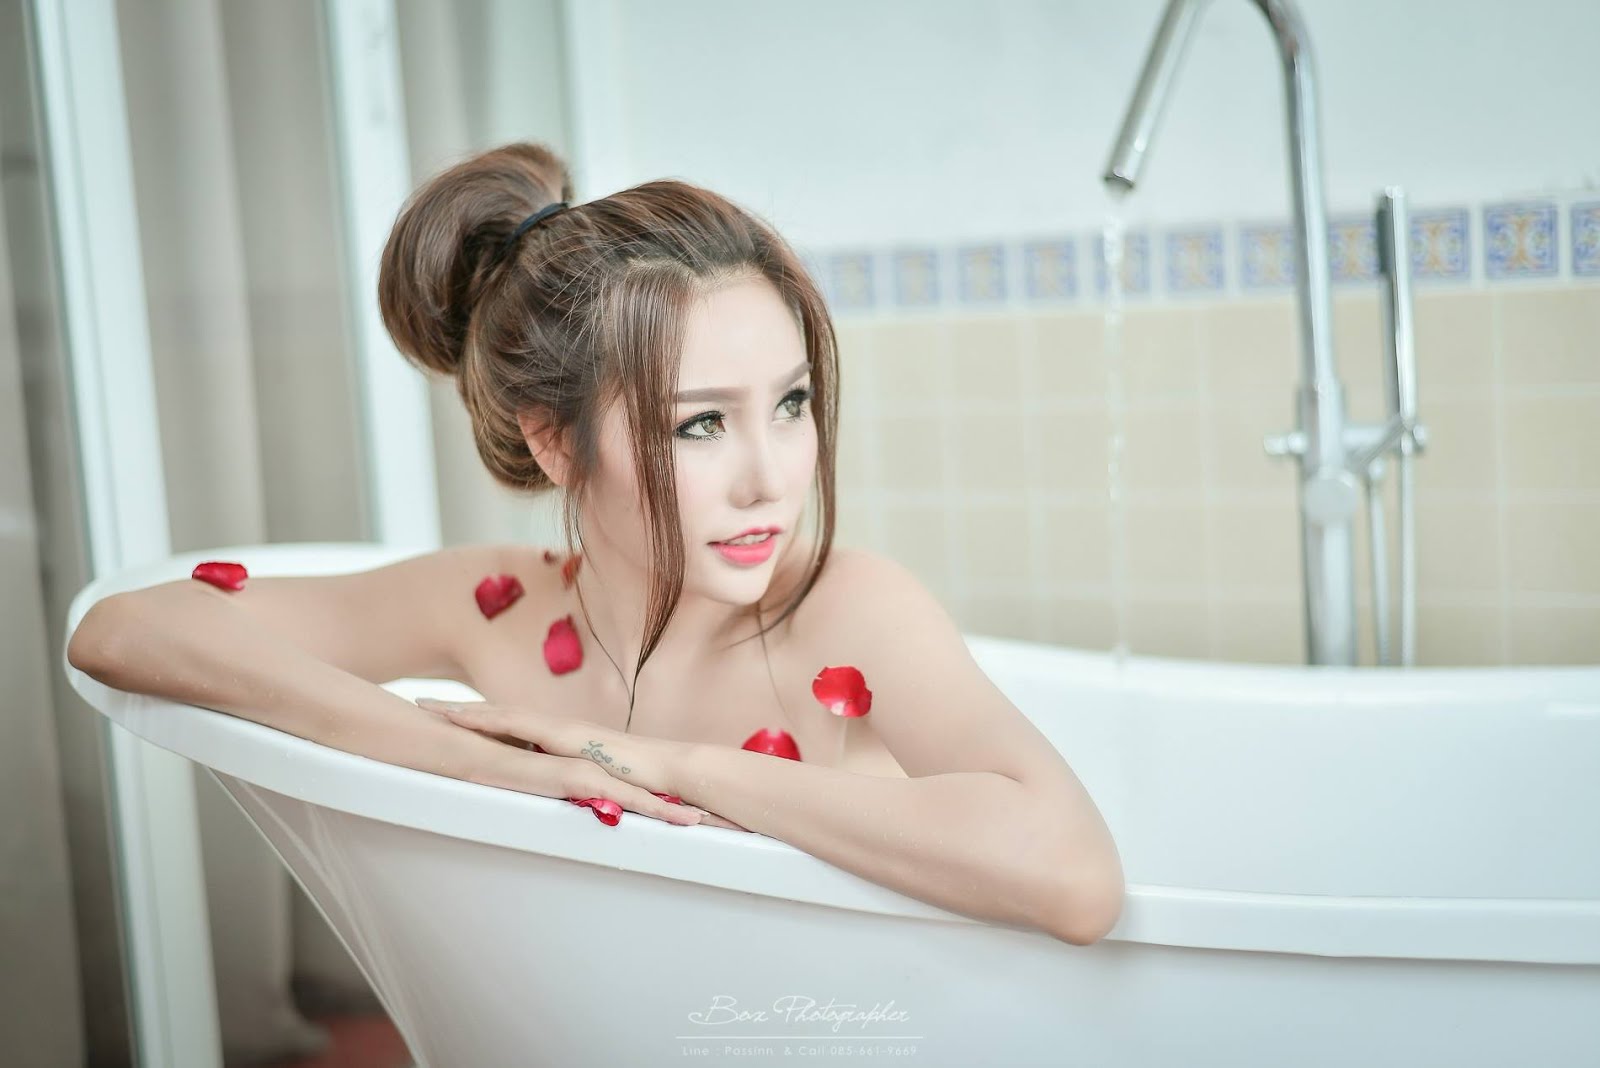 Hot Photo Model On Bathtub